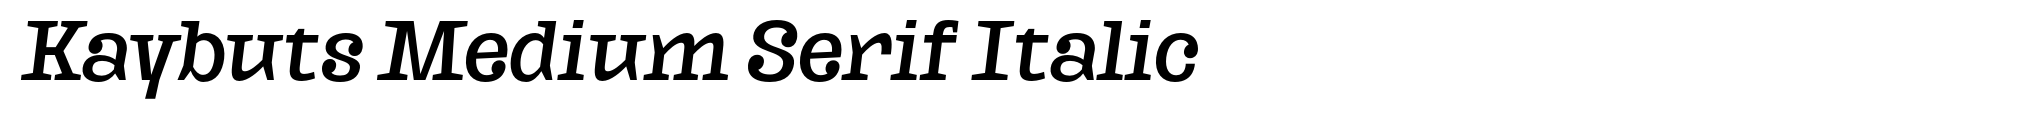 Kaybuts Medium Serif Italic image